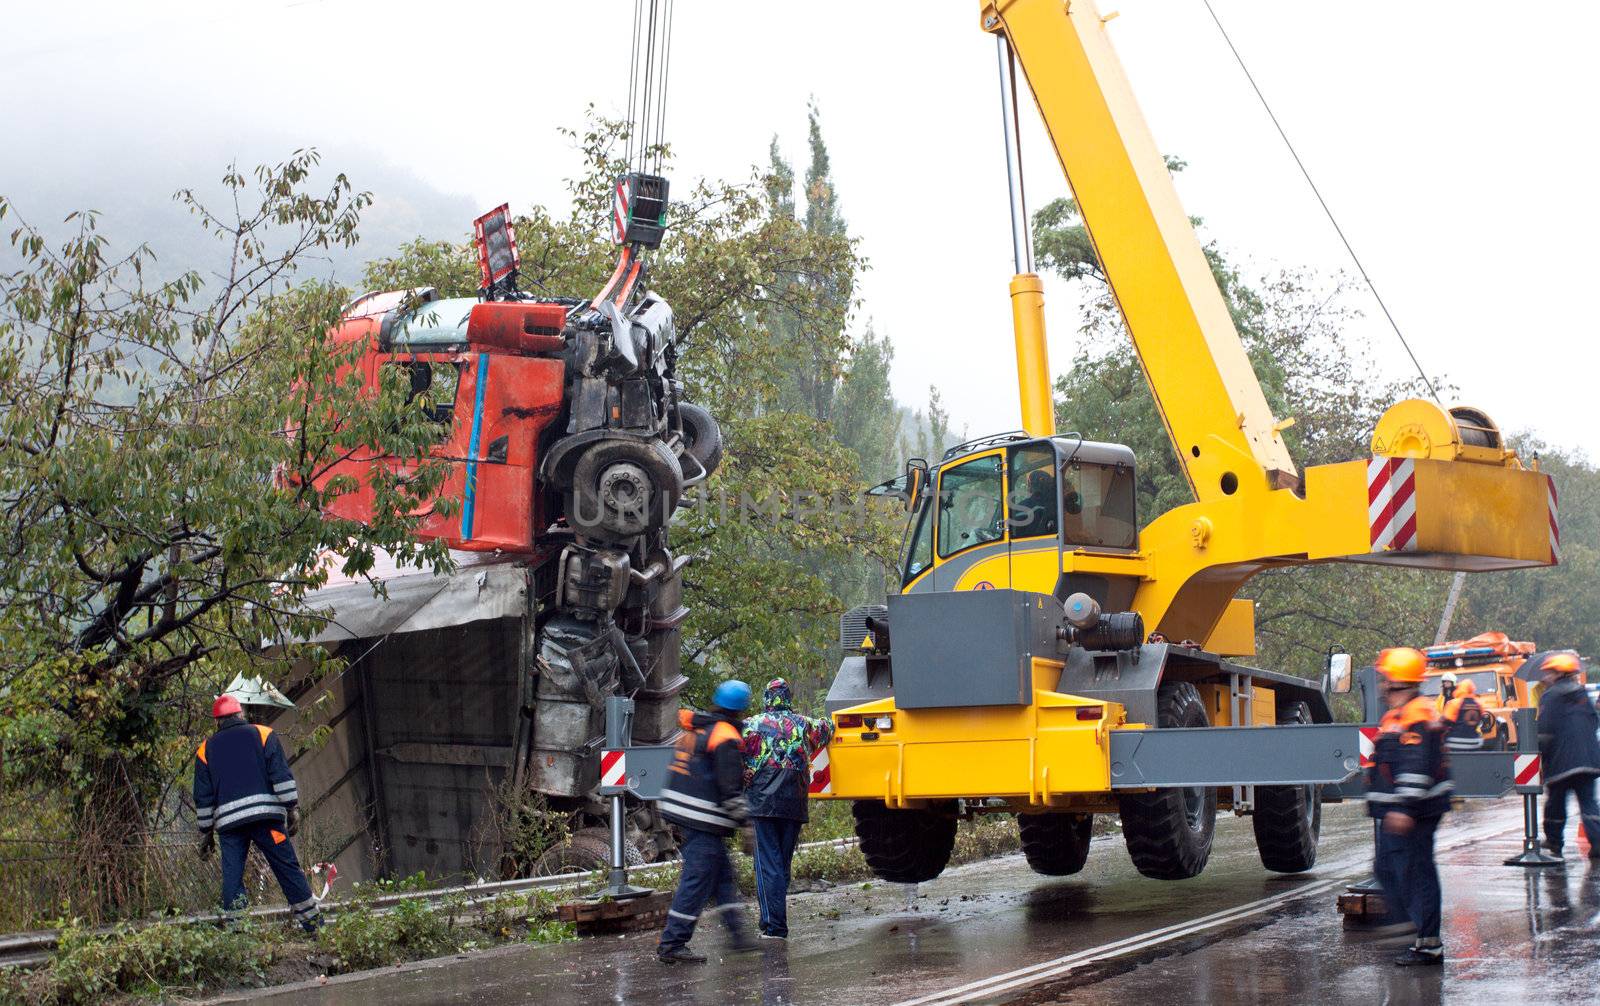 Crane lifting crashed truck by vilevi